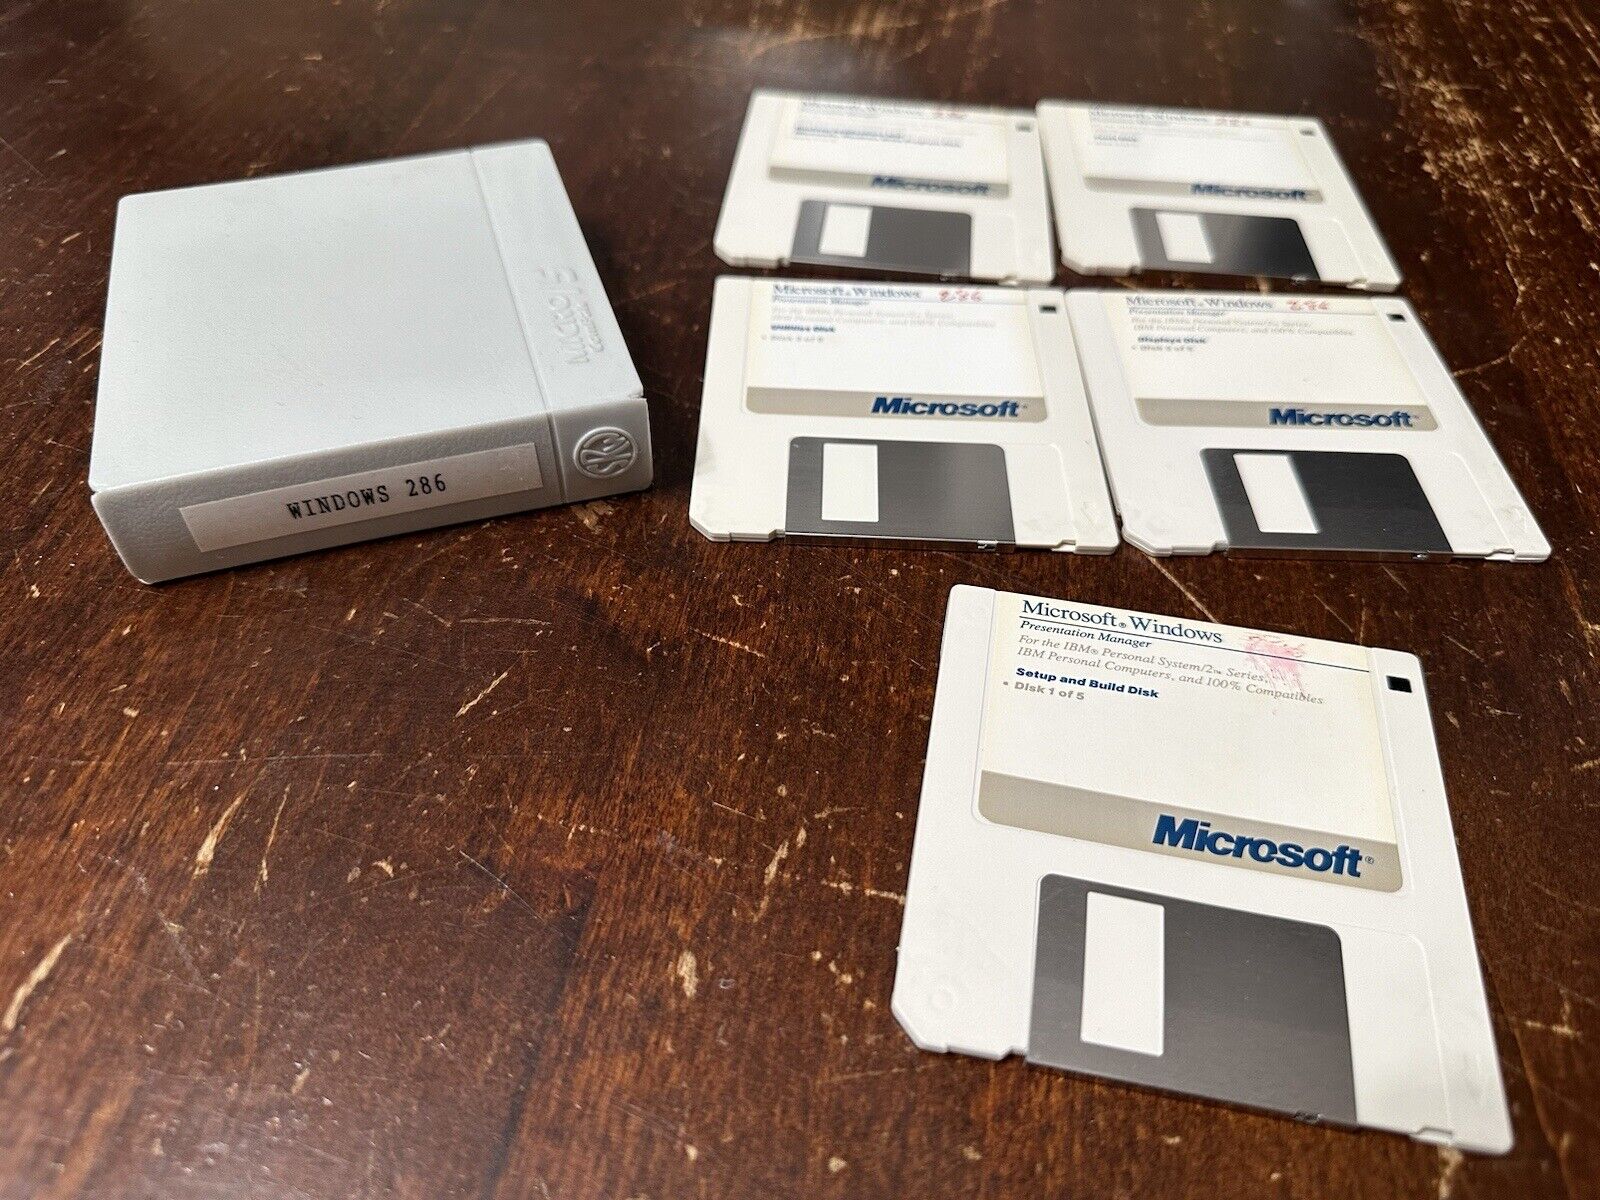 Microsoft Windows 286 3.5” Floppy Disks